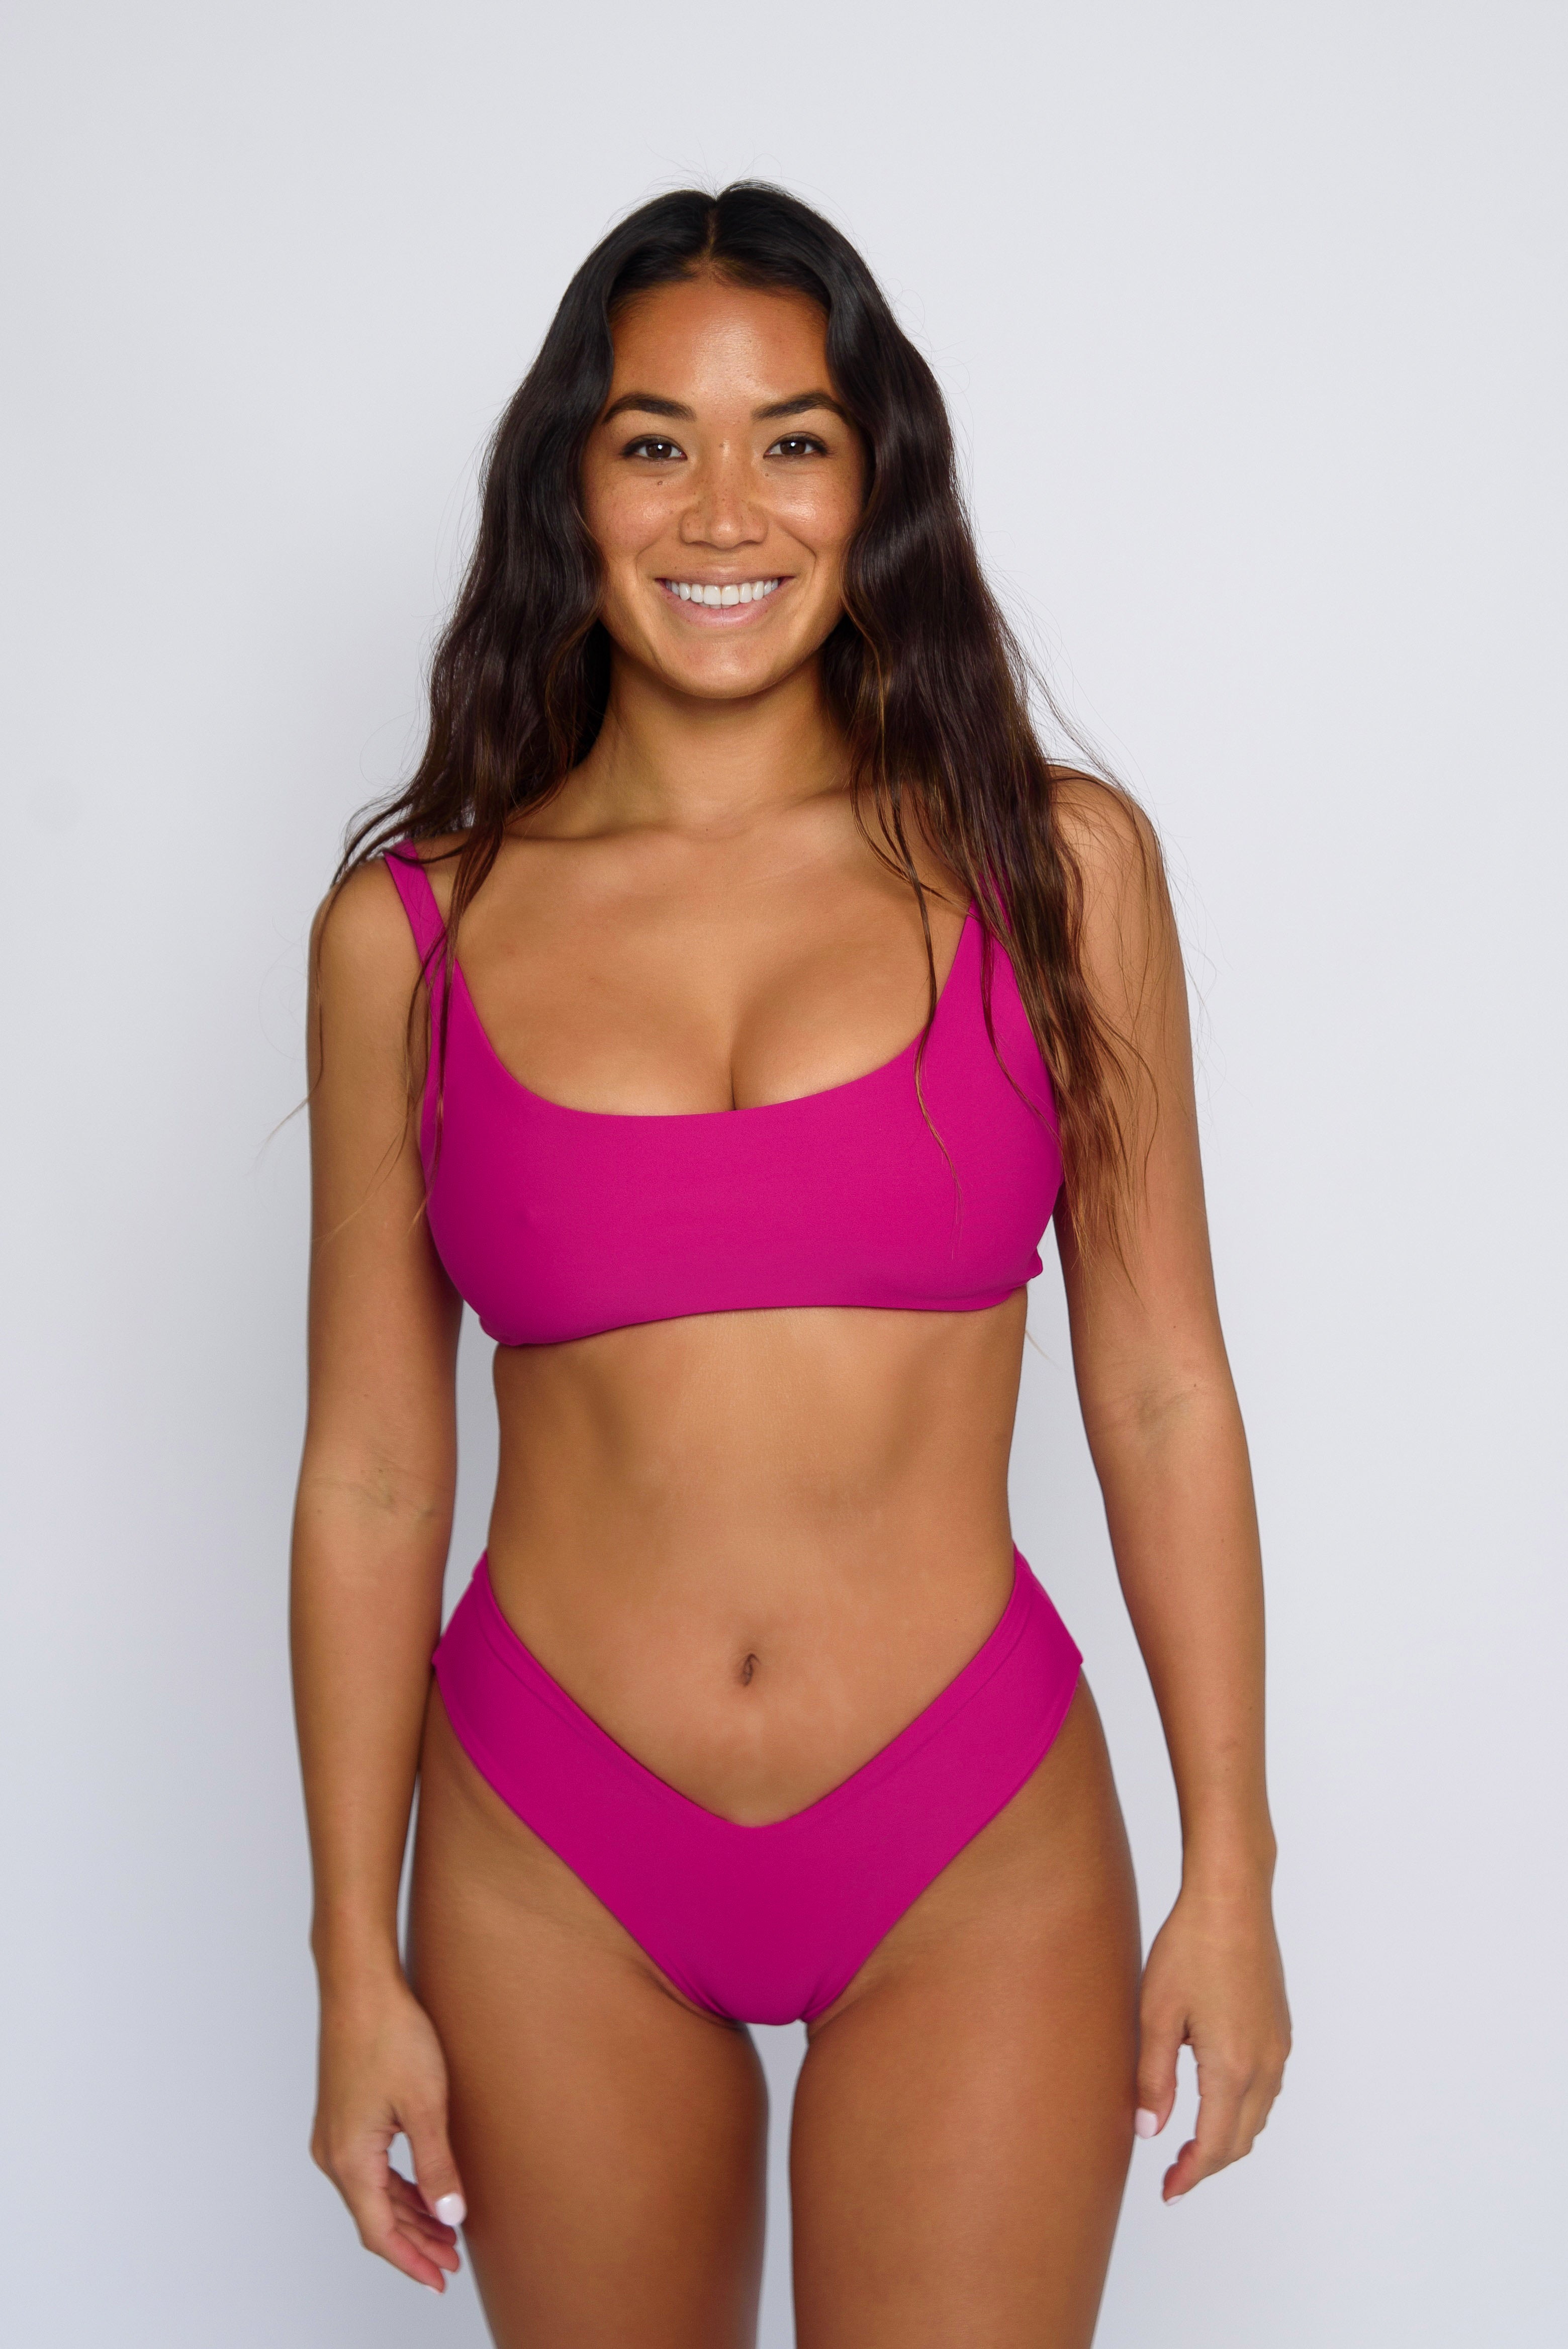 Coco Rave Bra Sized Triangle Top Swimwear Swimsuit Bikini Sz XS / S -  30/32C-Cup